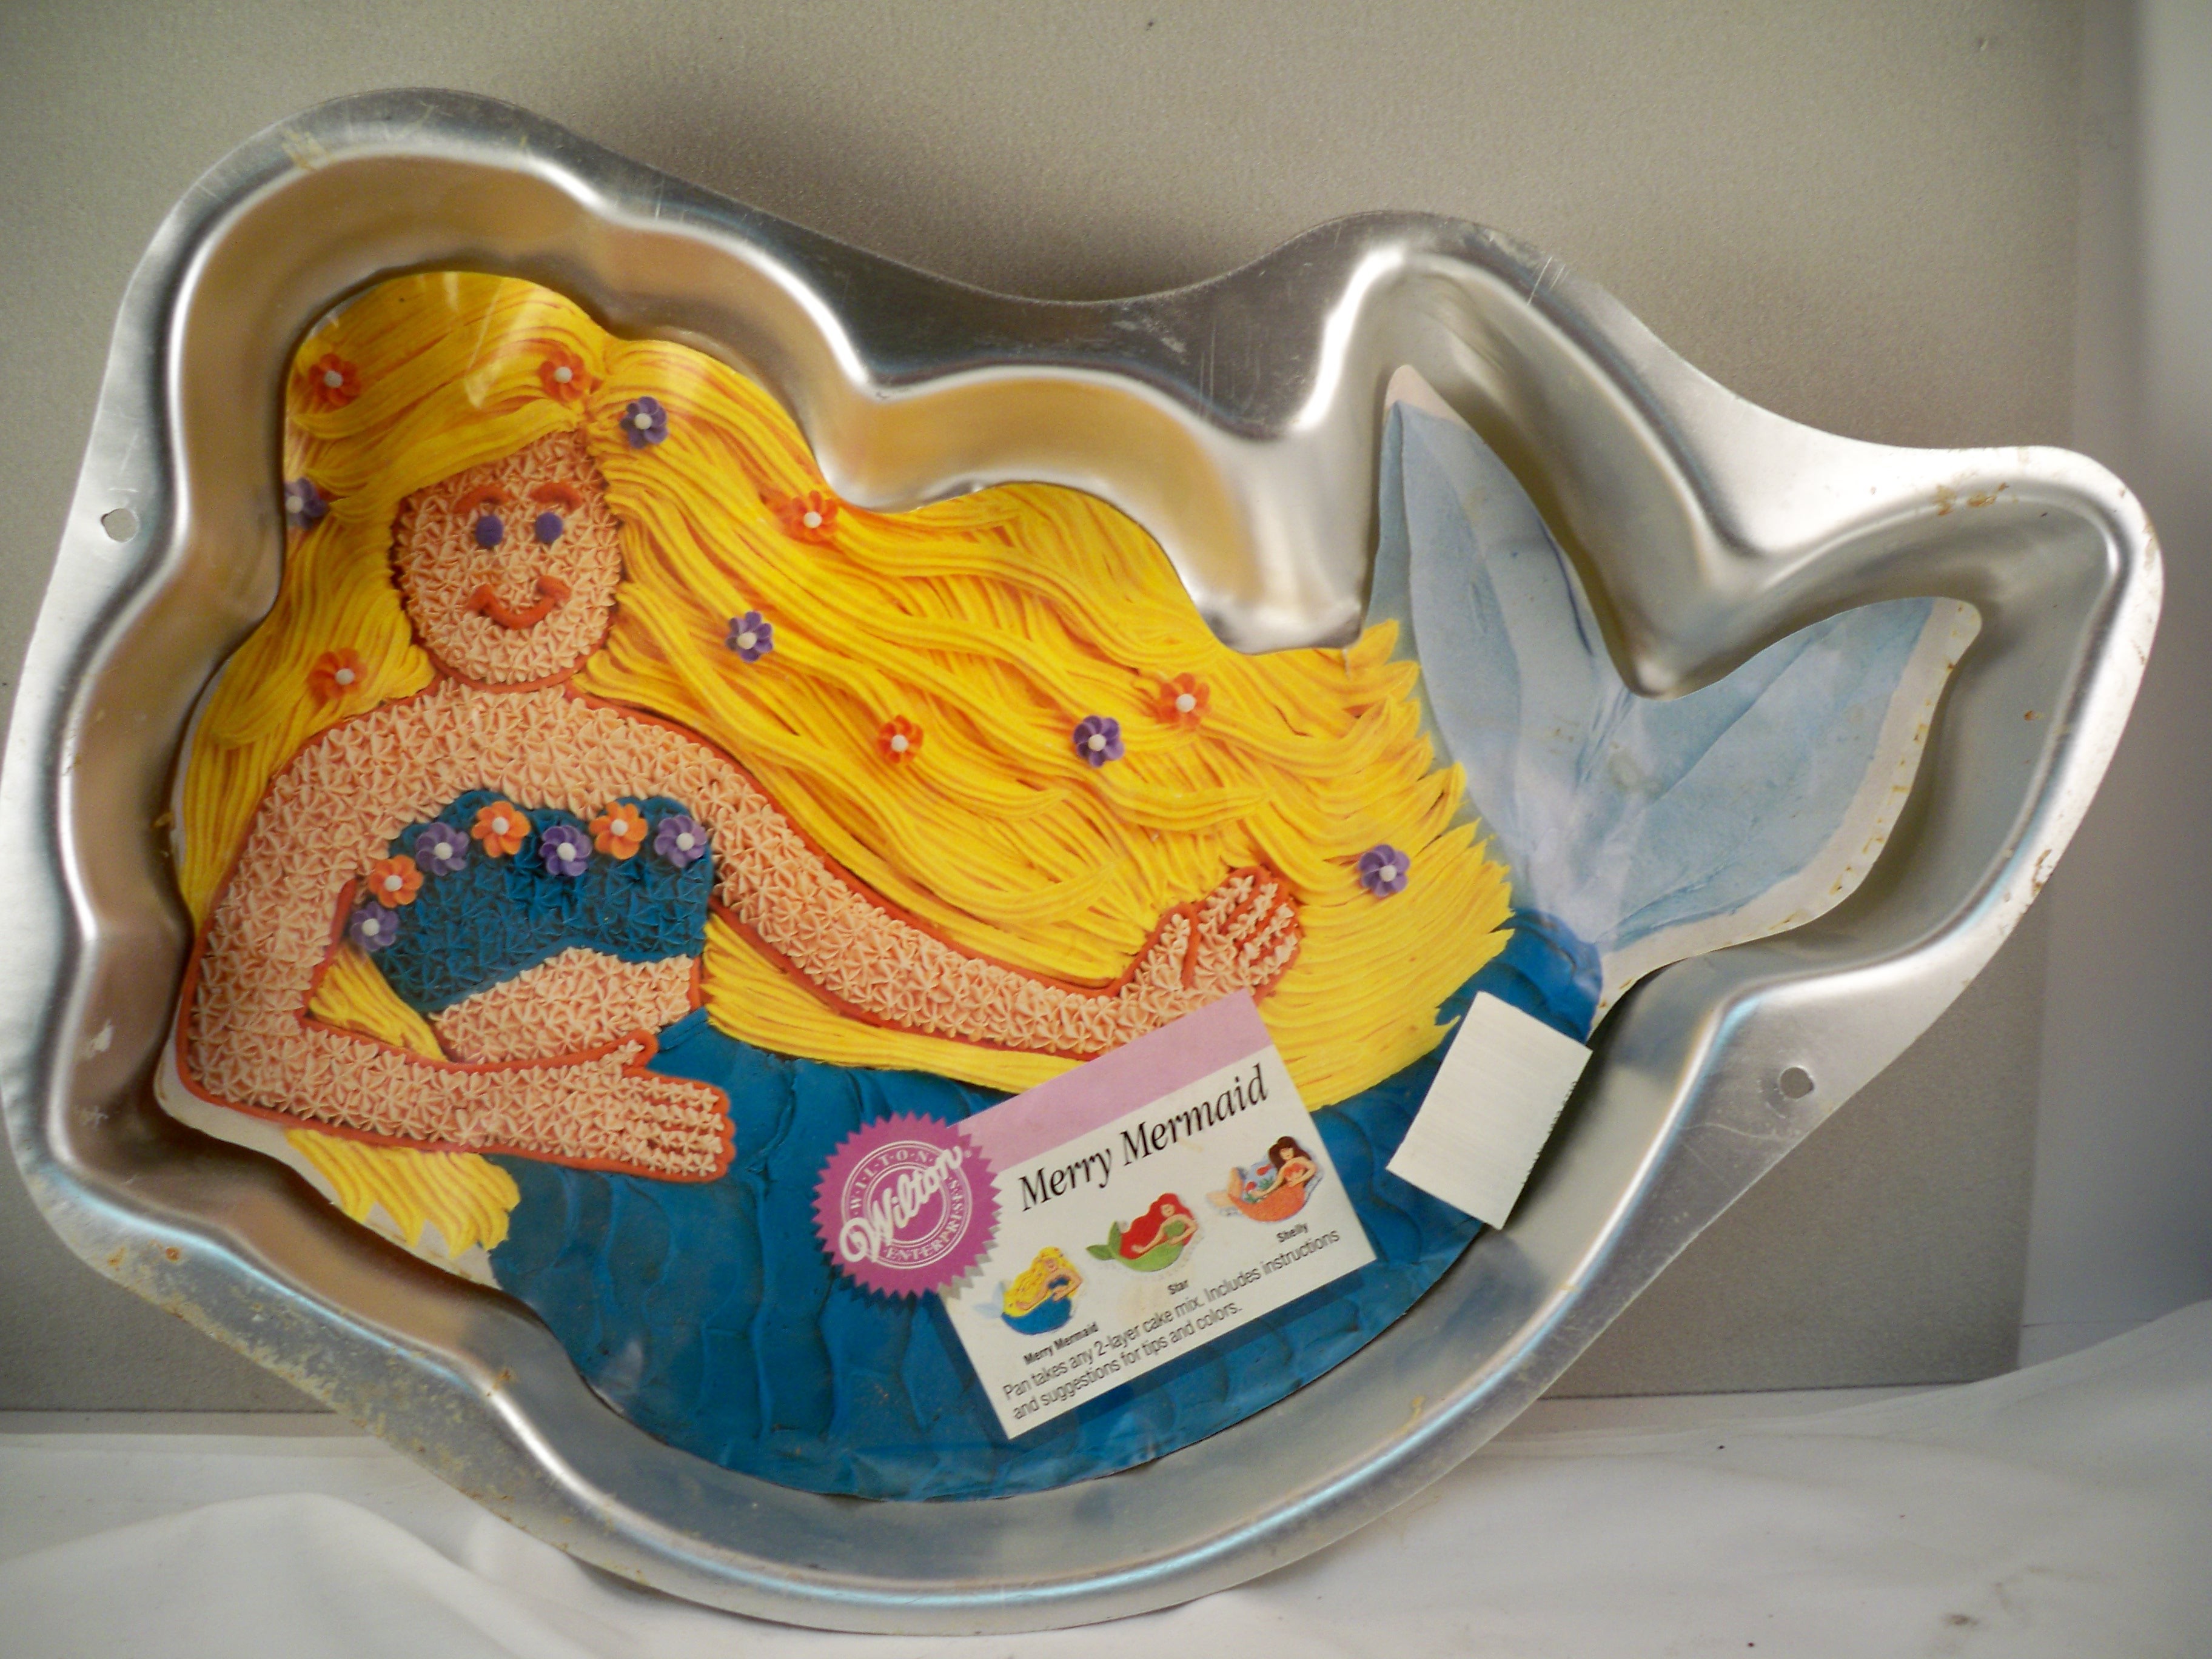 Wilton Merry Mermaid Cake Pan